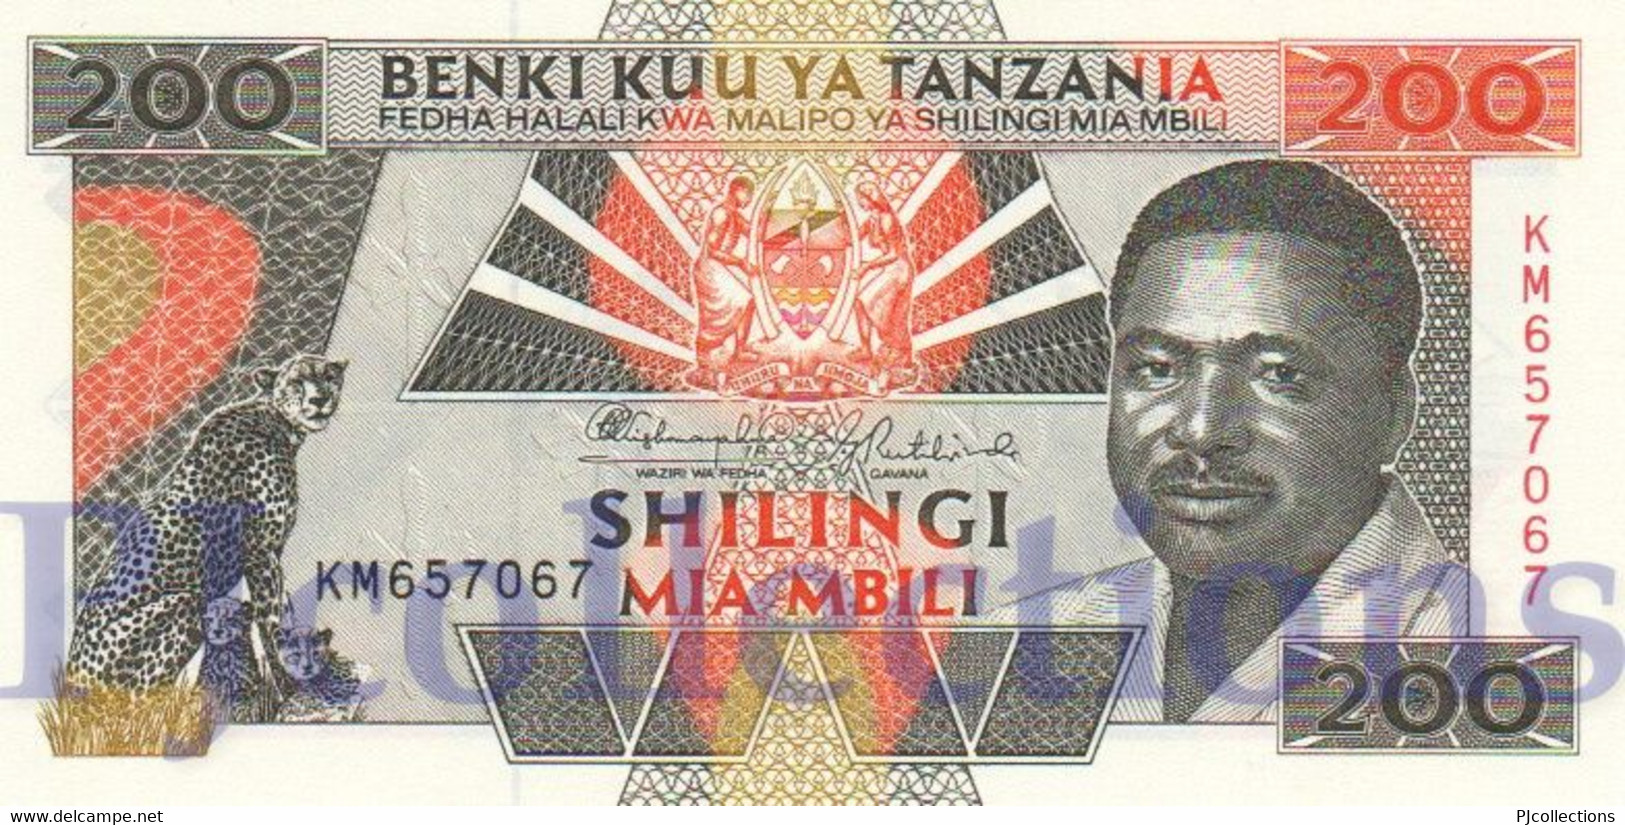 TANZANIA 200 SHILINGI 1993 PICK 25b UNC - Tanzanie